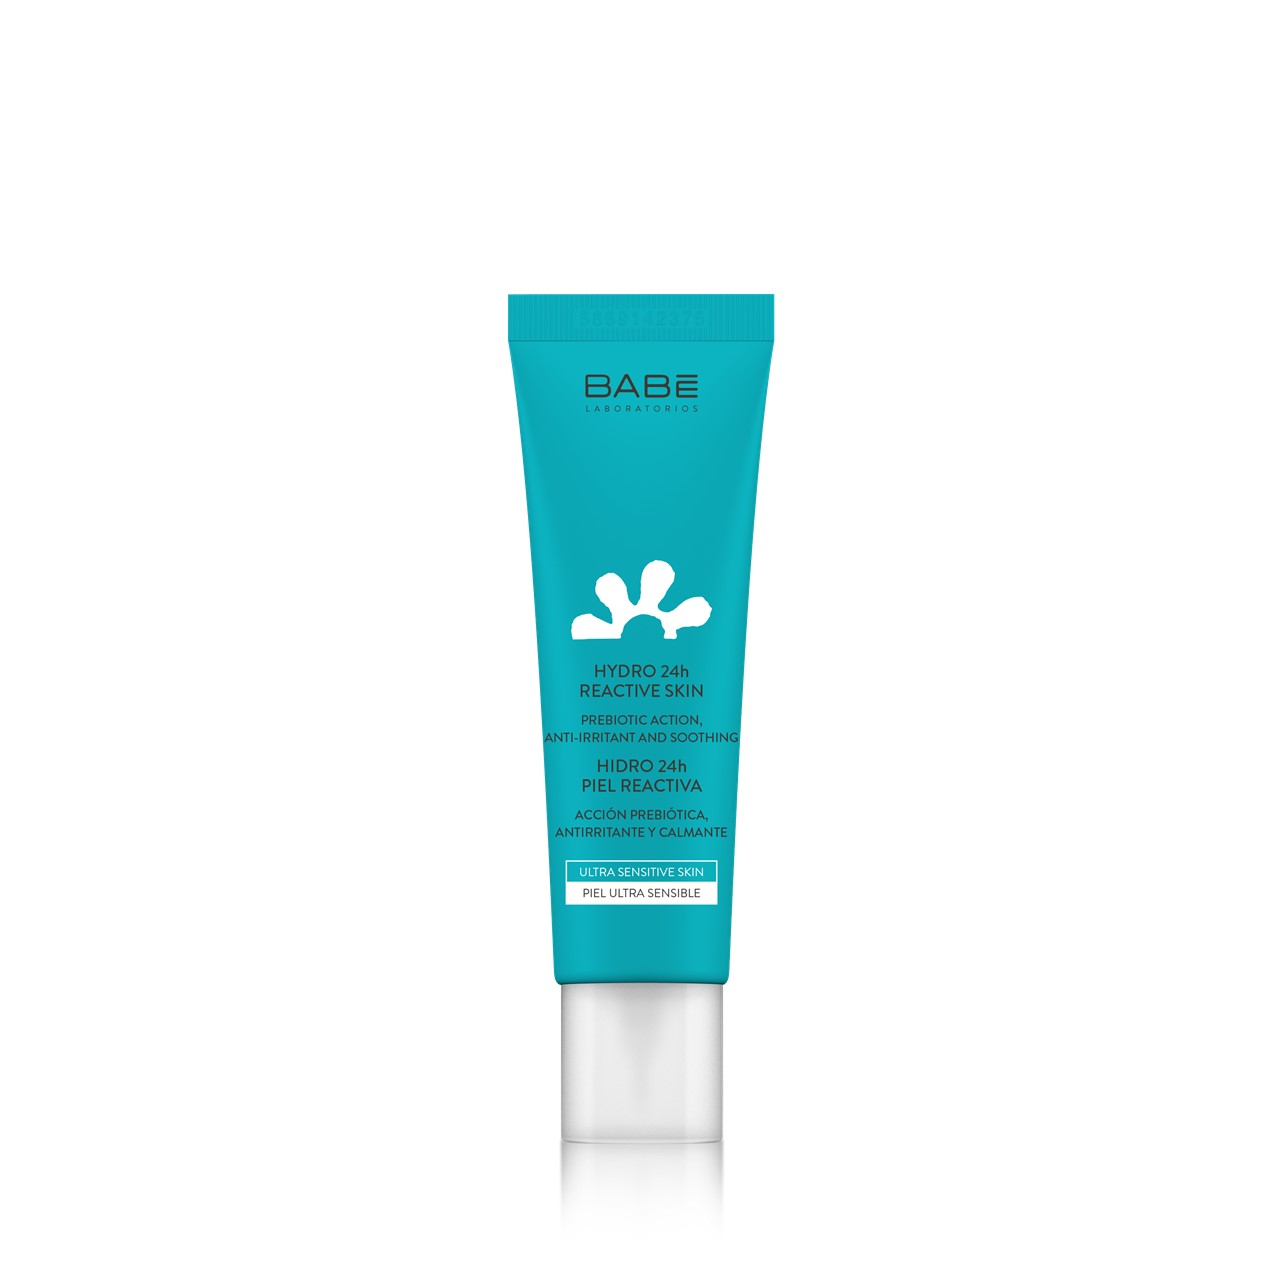 Babé Hydro 24h Reactive Skin Cream 50ml (1.69fl oz)